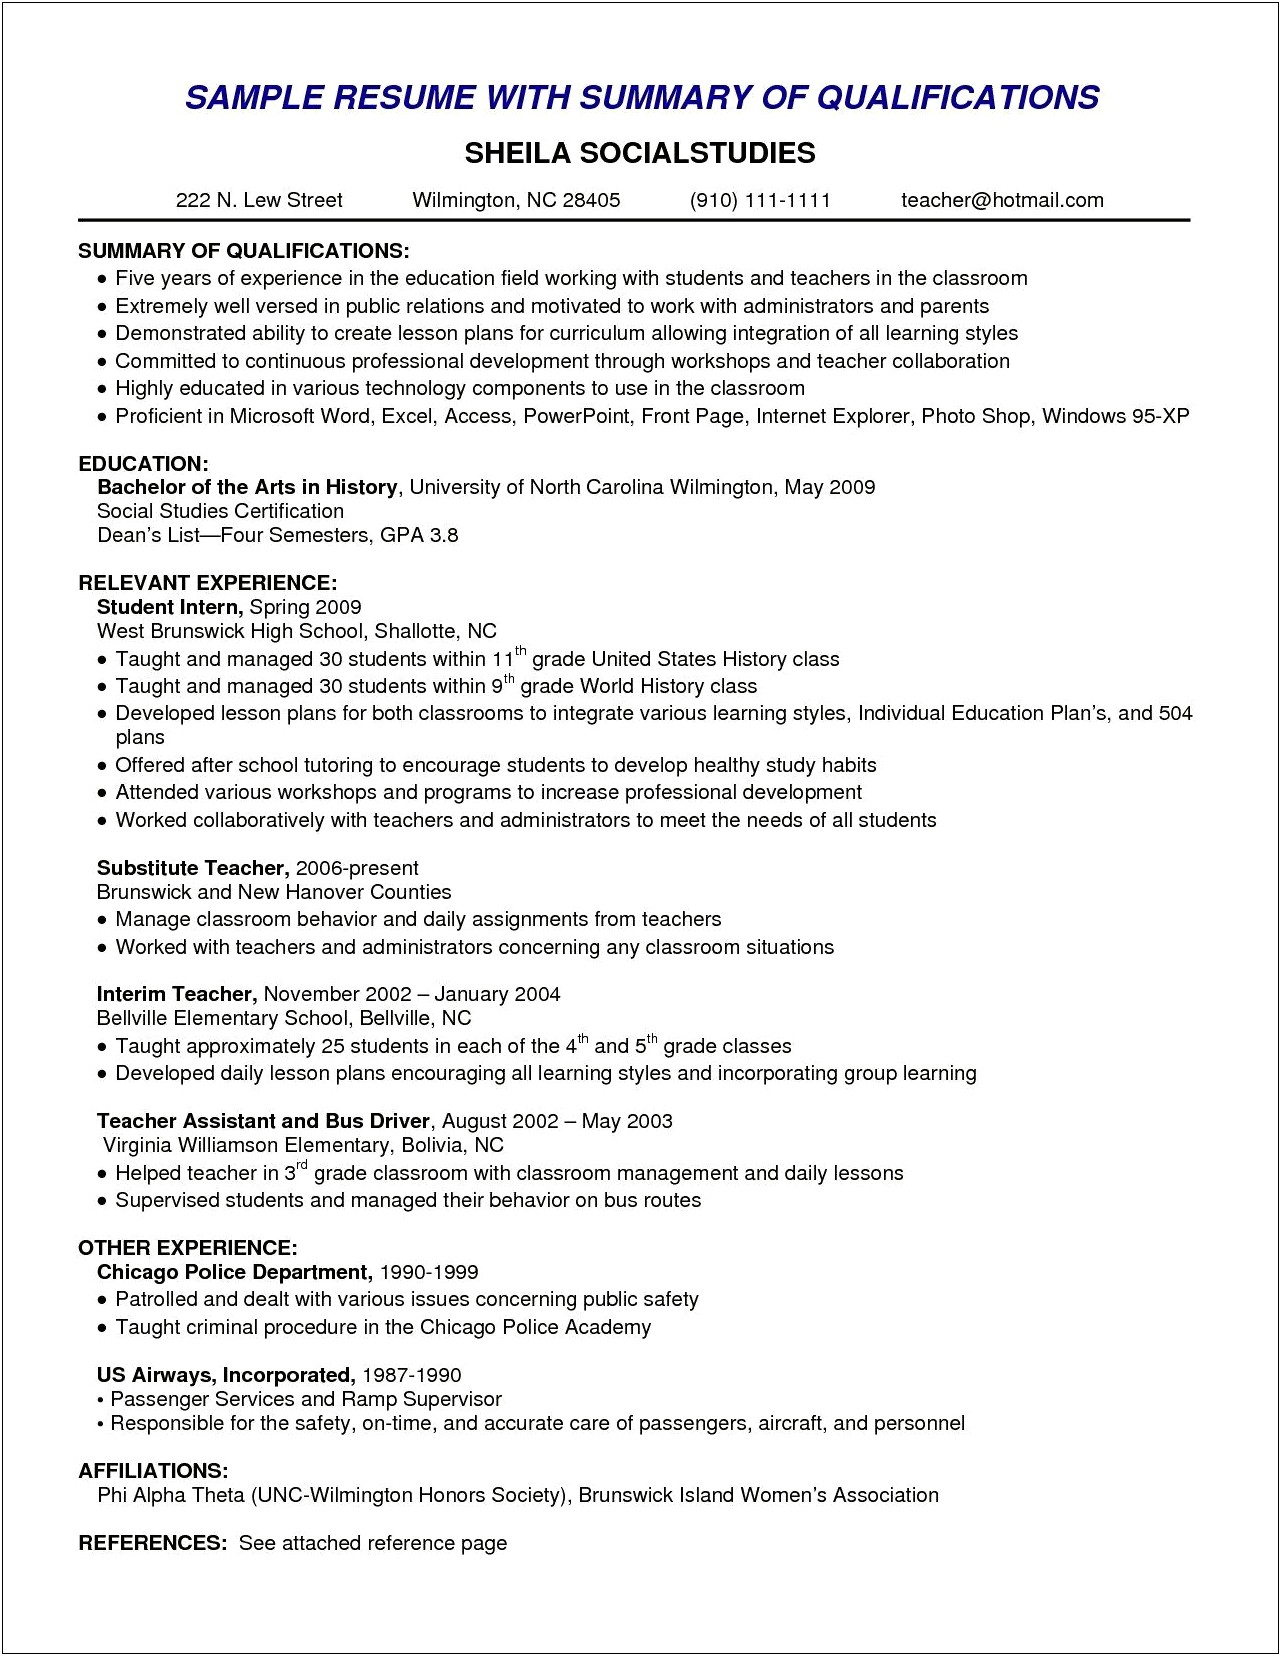 Basic Resume Summary And Skills